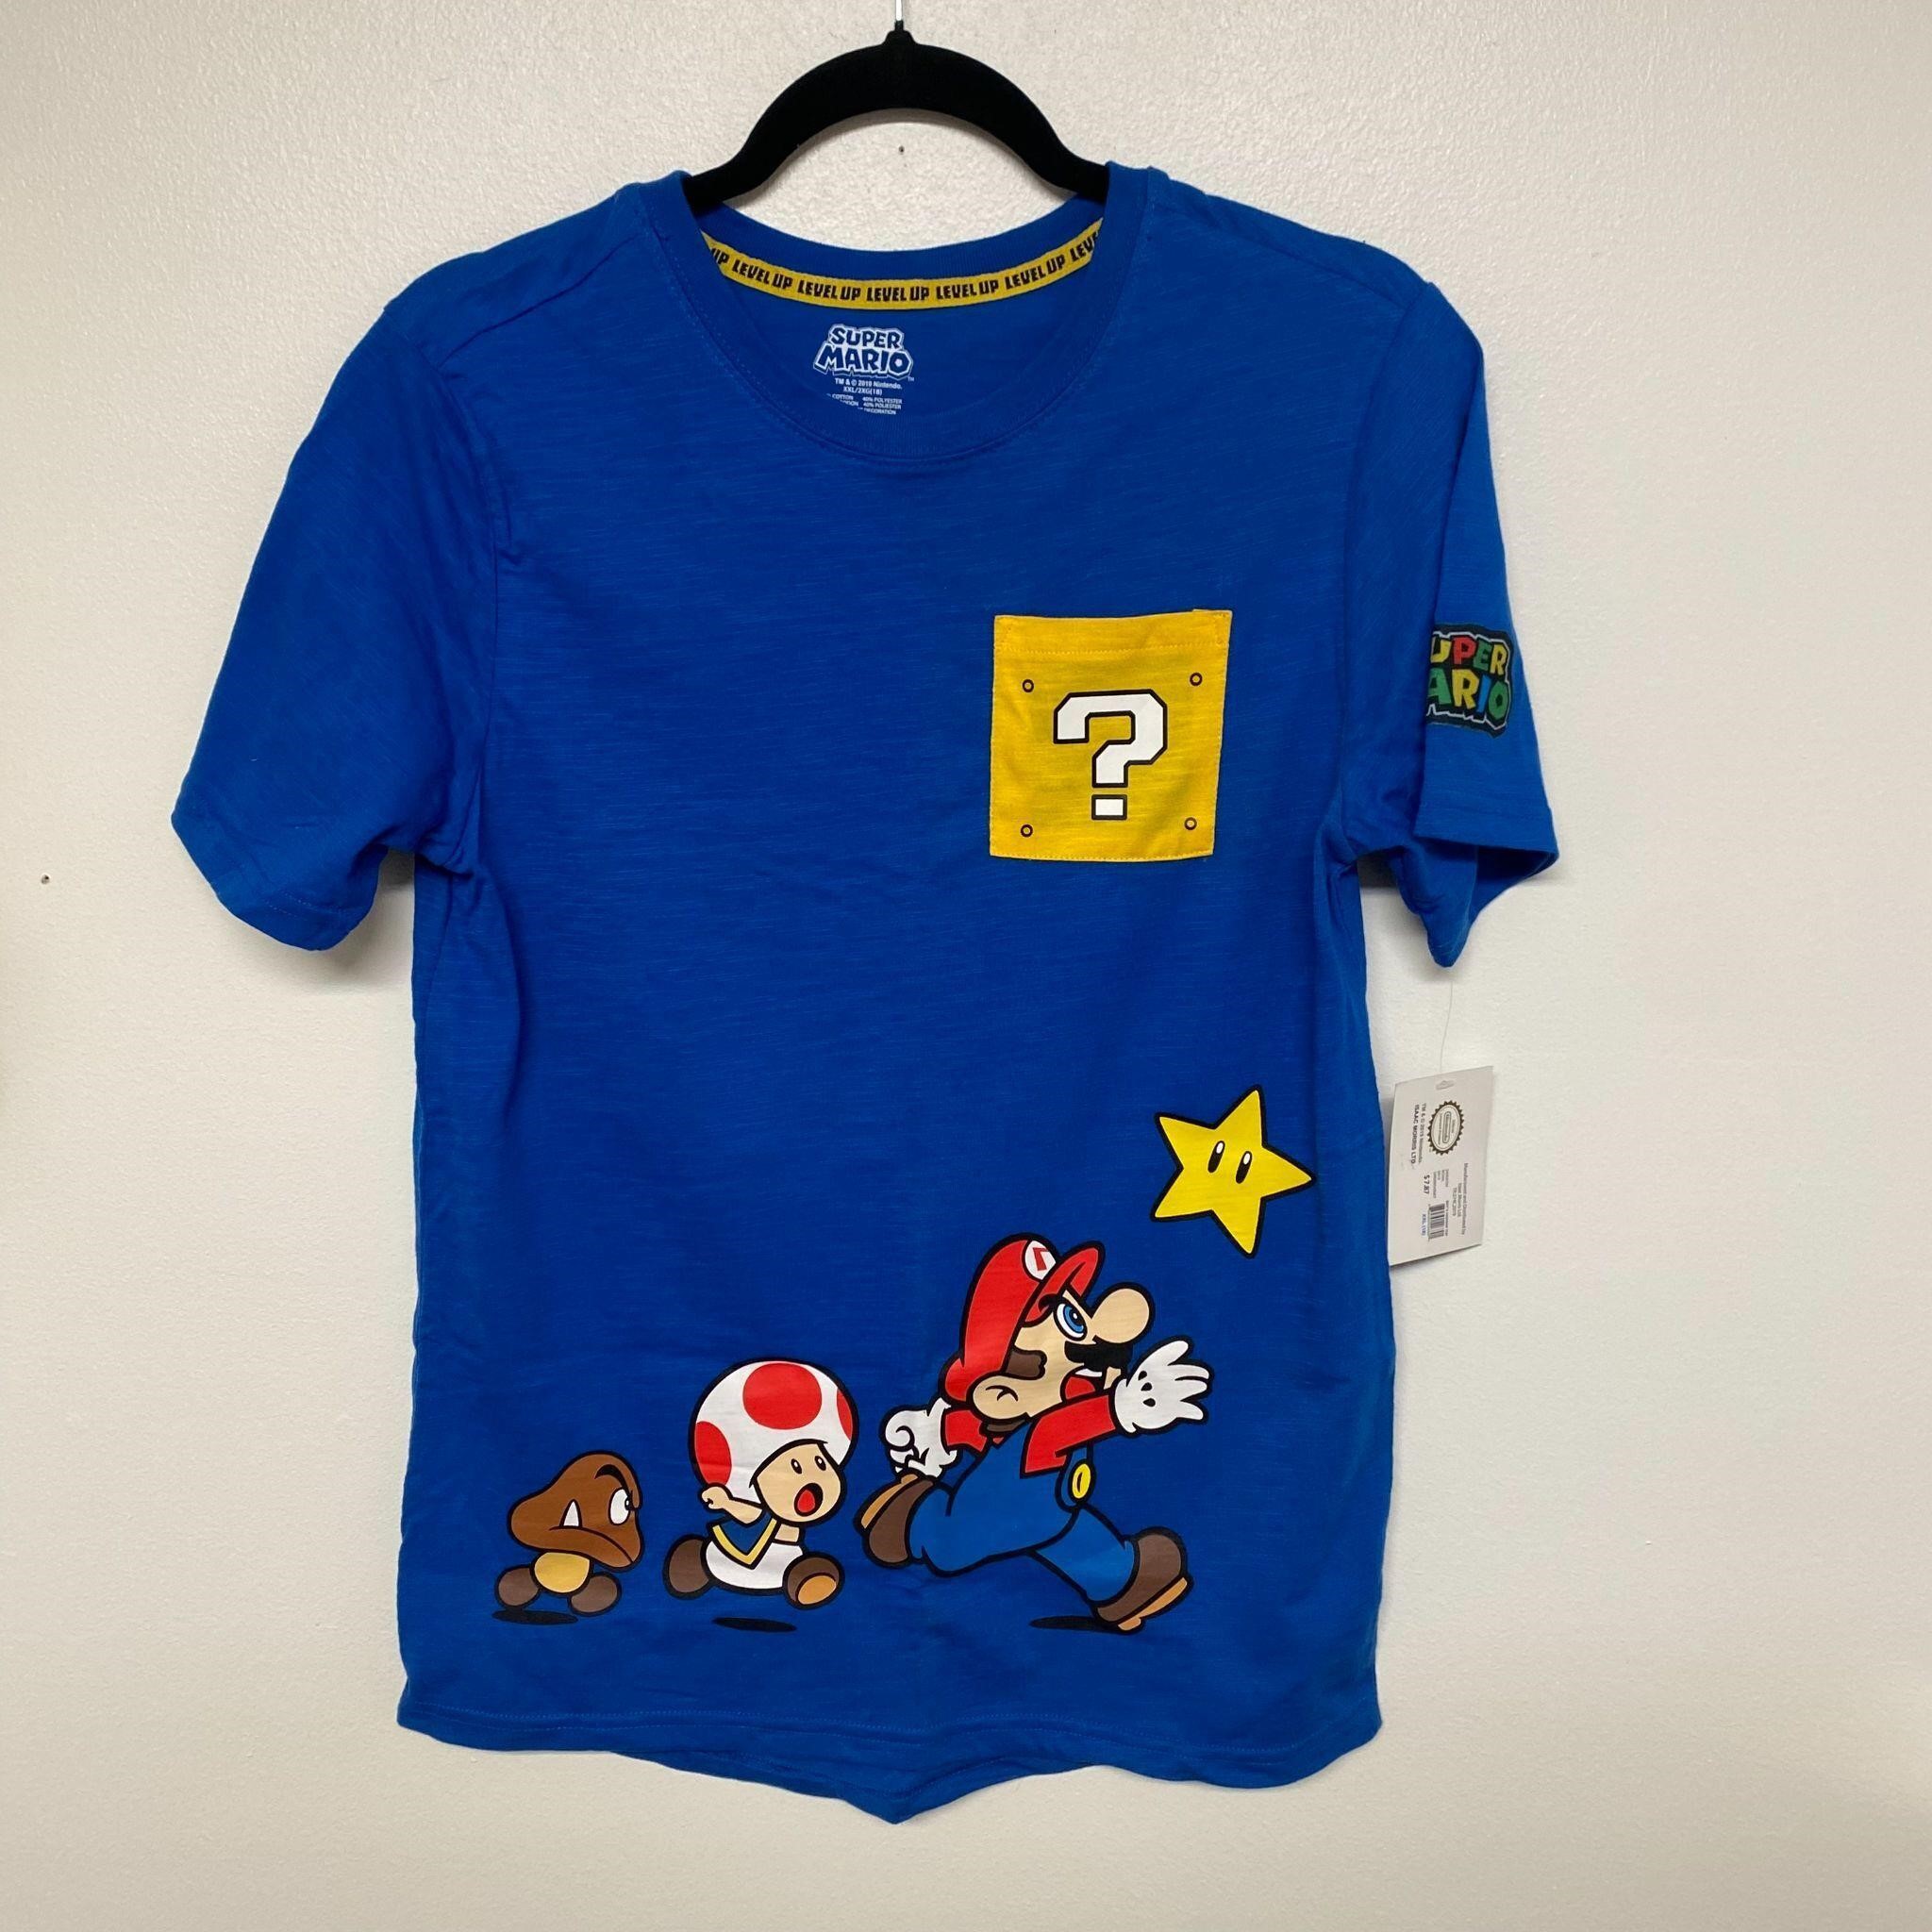 Super Mario Blue T-shirt Size 2XL, New w/Tags